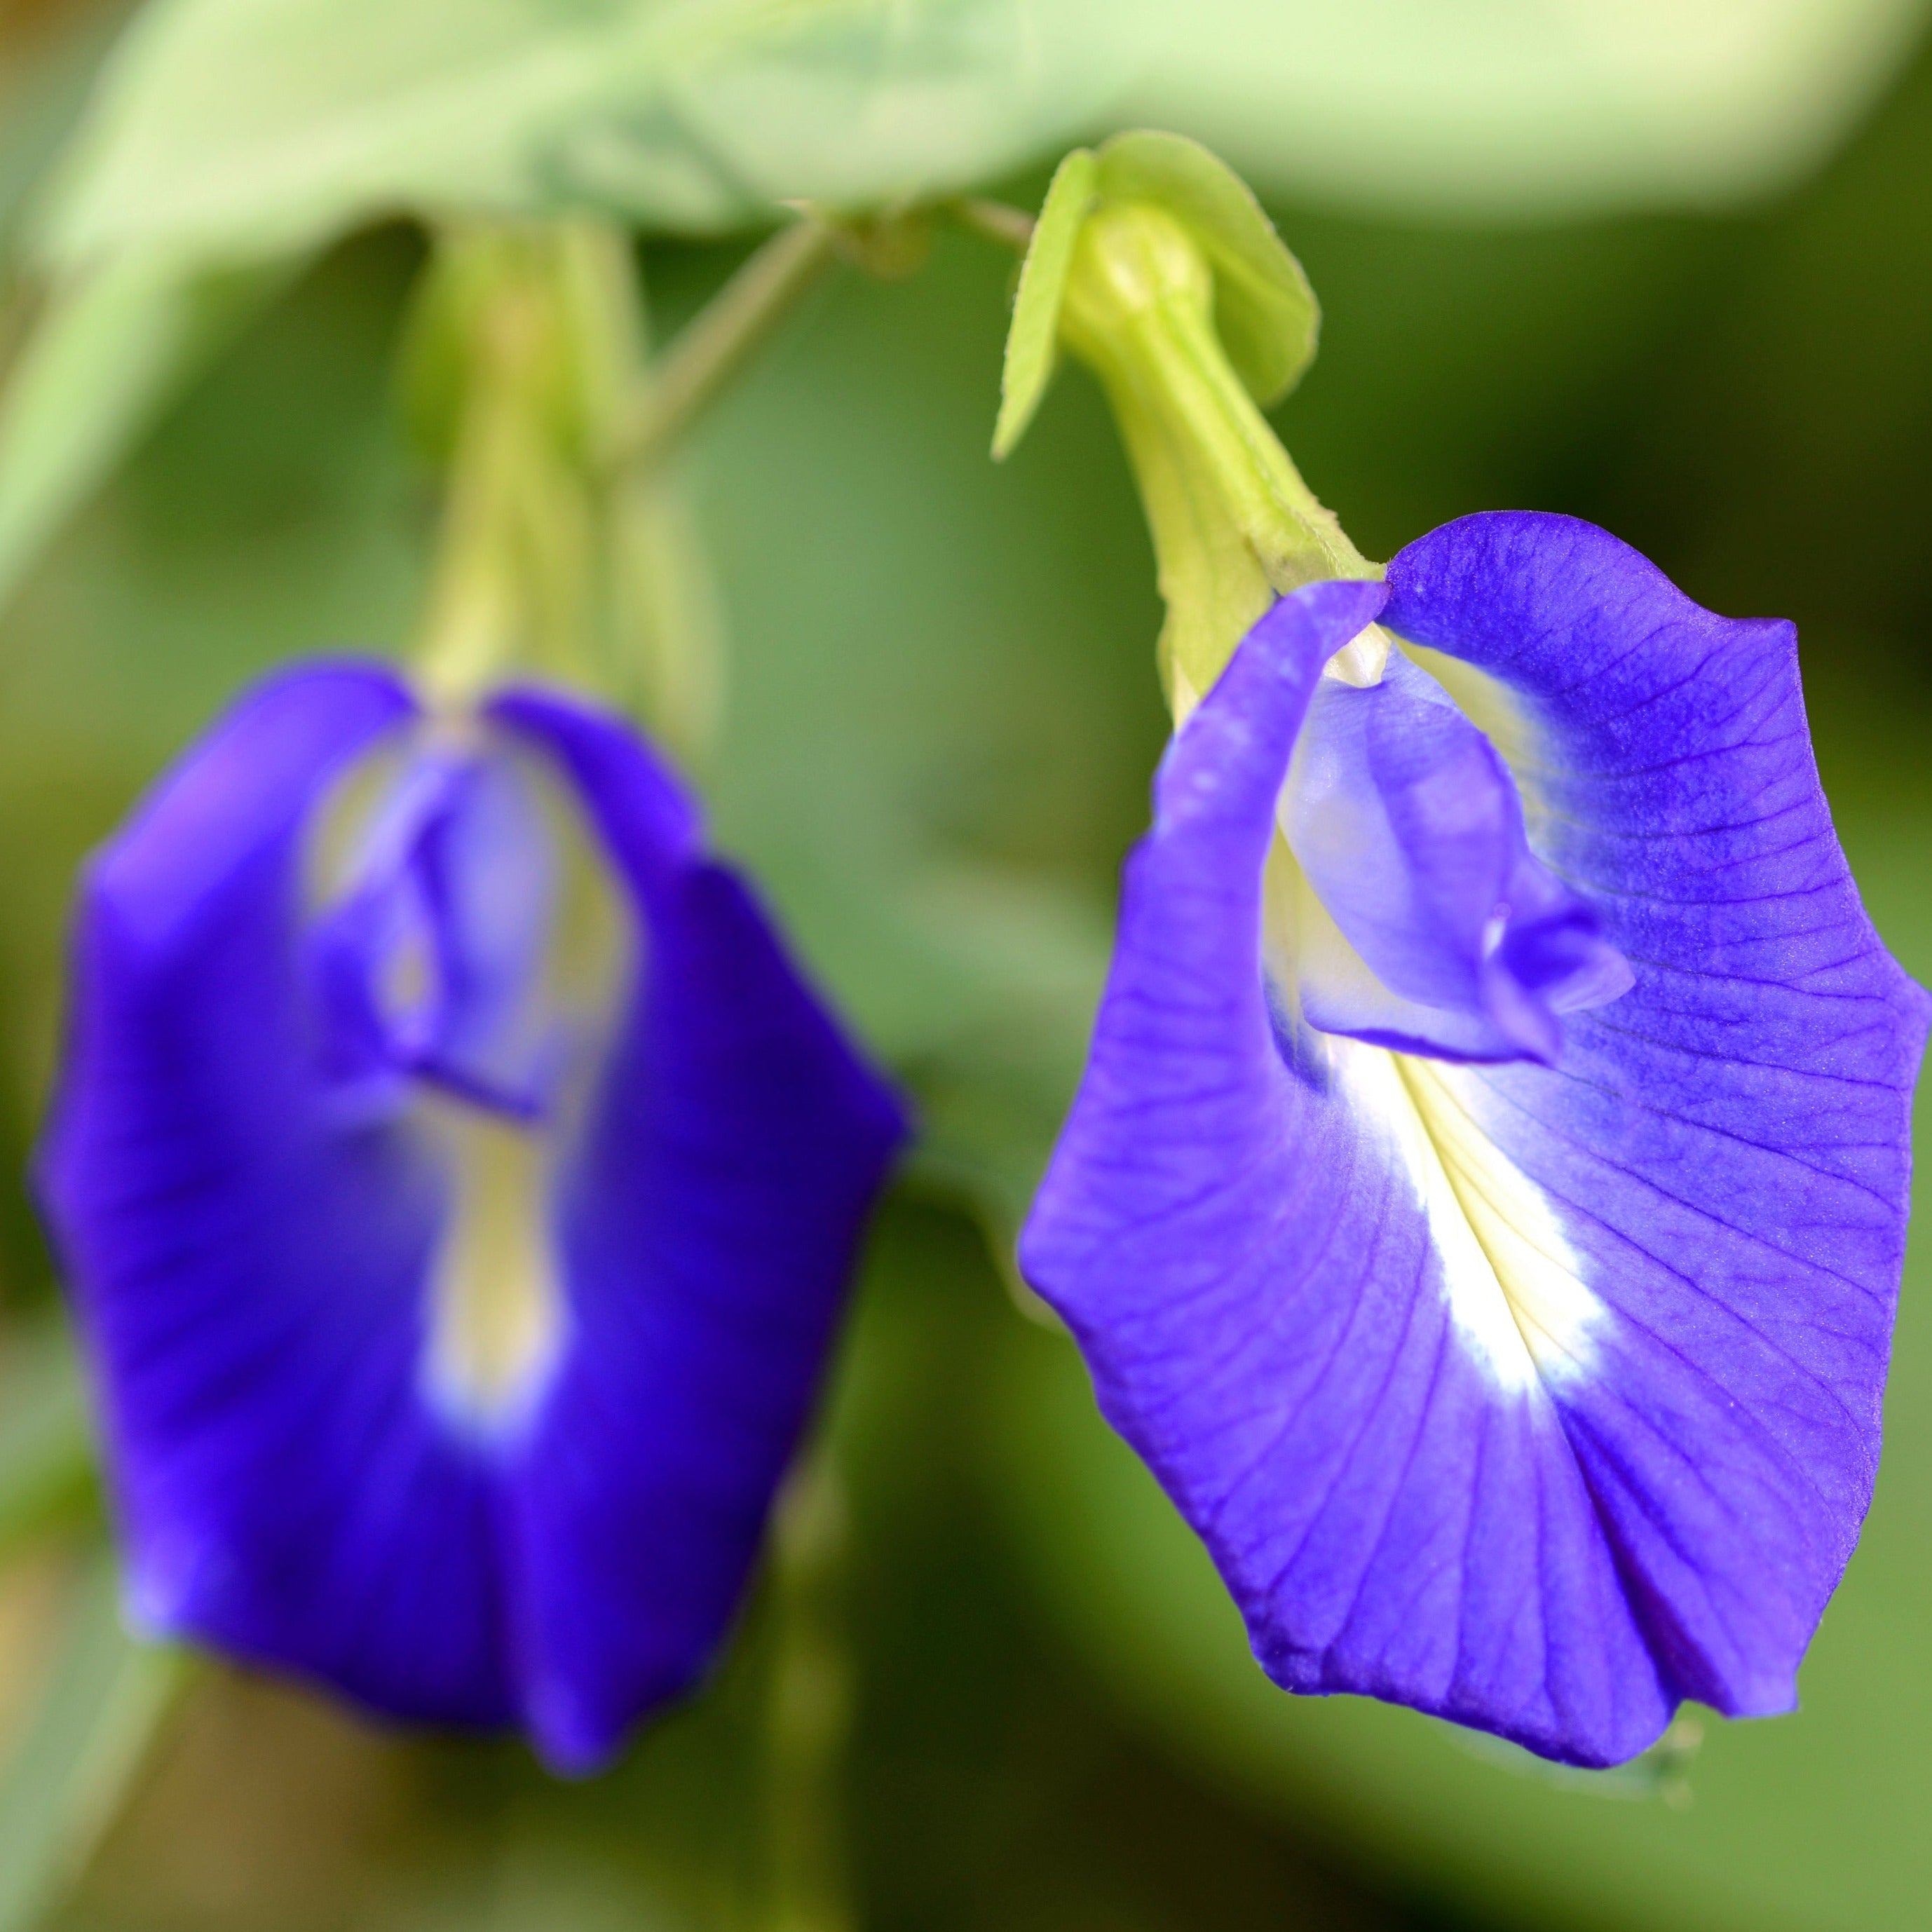 Blue Matcha - Butterfly Pea Flower Powder